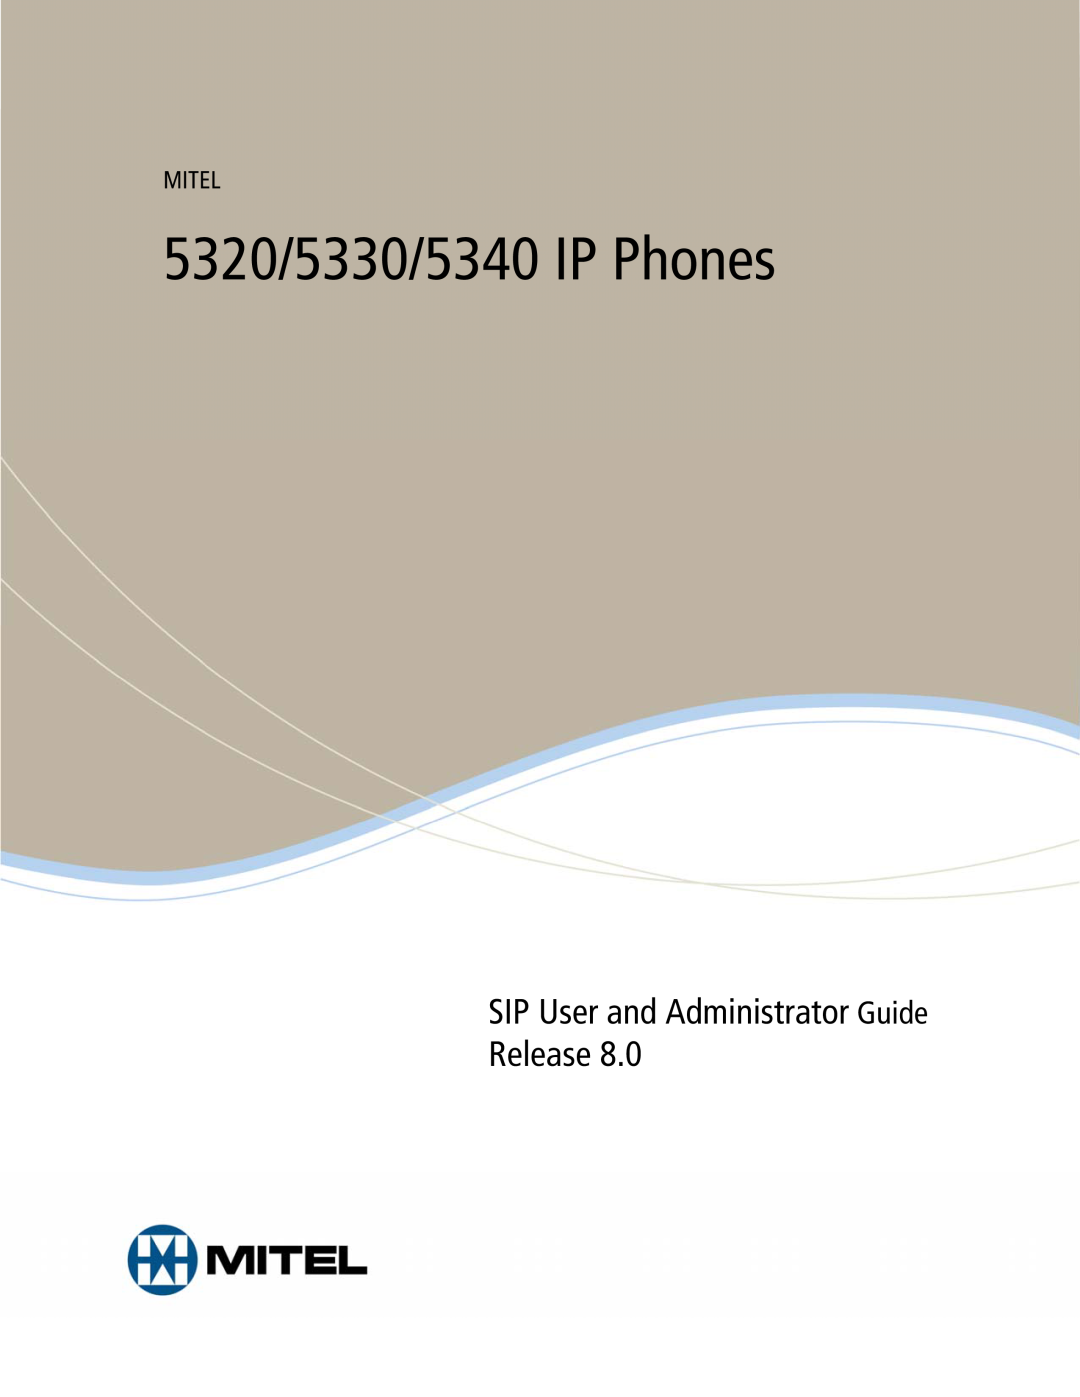 Mitel manual 5320/5330/5340 IP Phones, SIP User and Administrator Guide Release, Mitel 